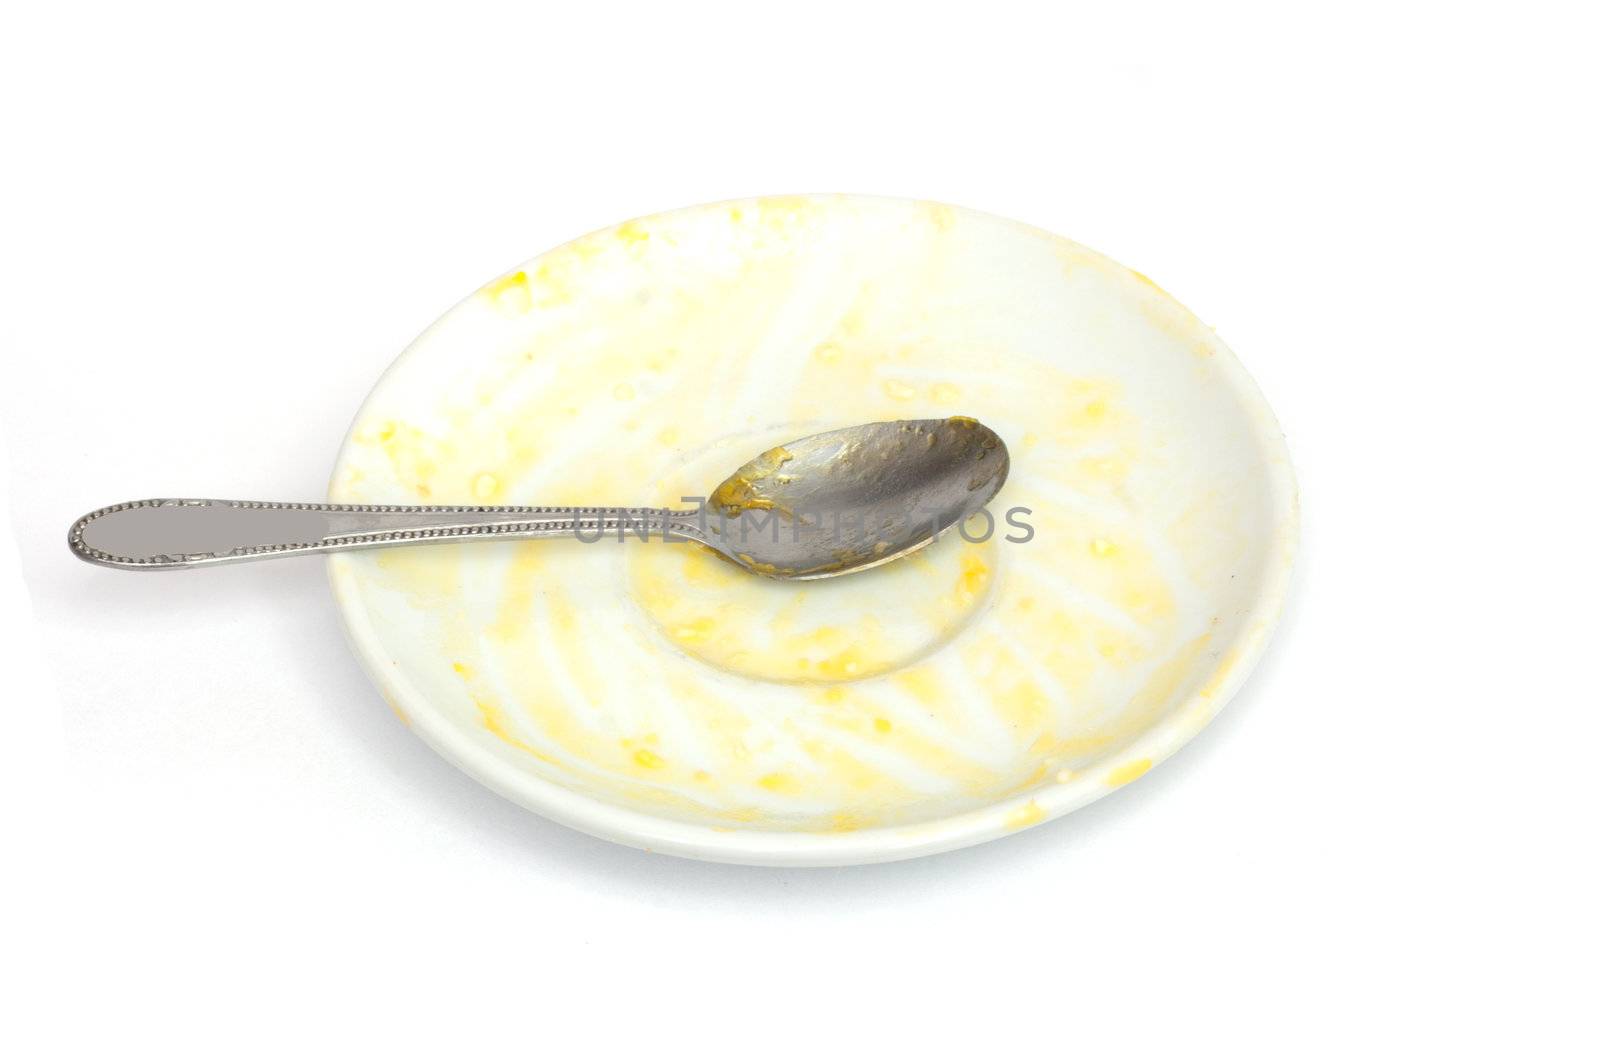 empty dish after food, white background  by schankz